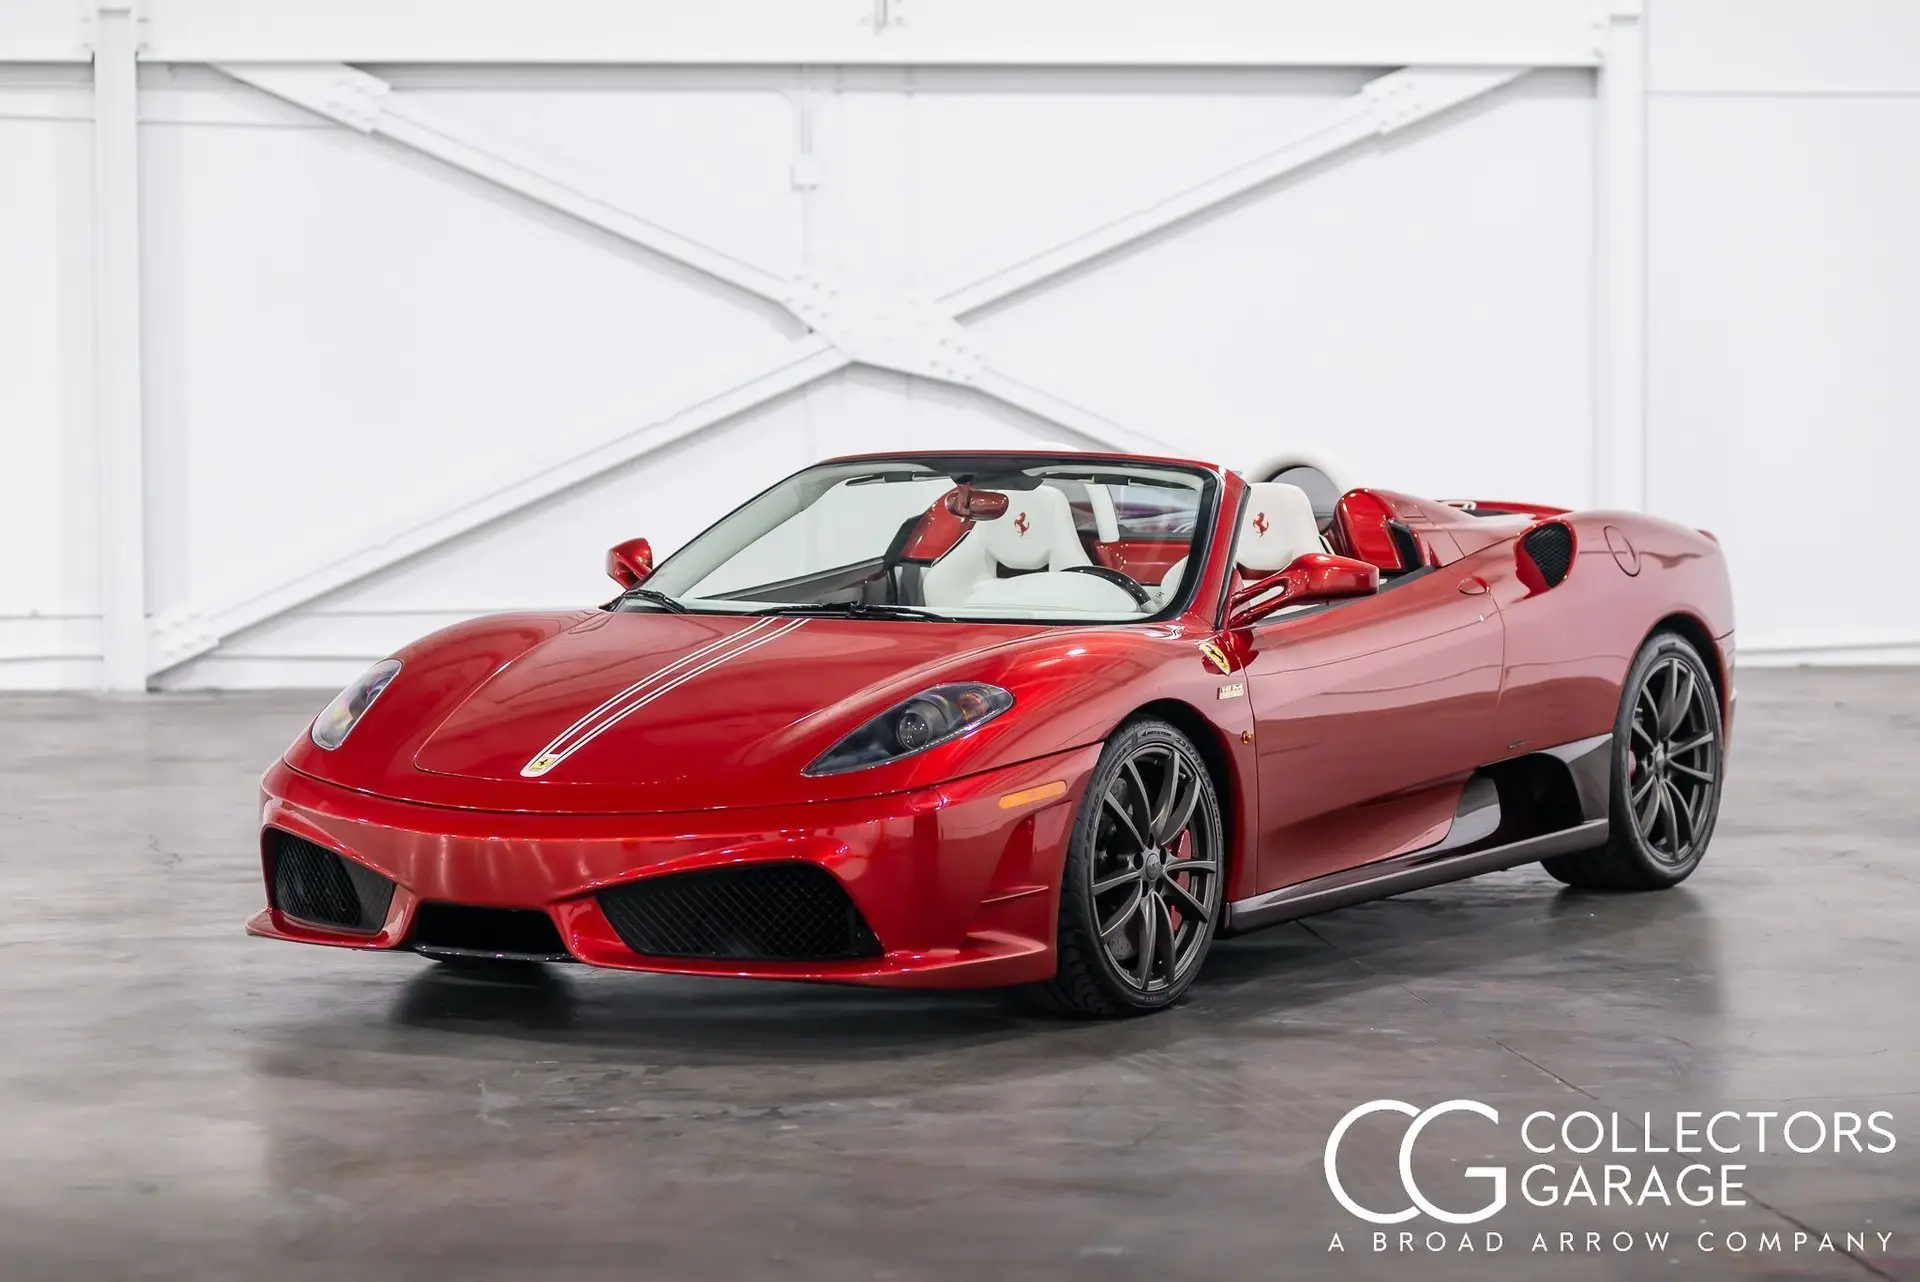 ferrari f430 16m for sale - How much does a Ferrari F430 cost